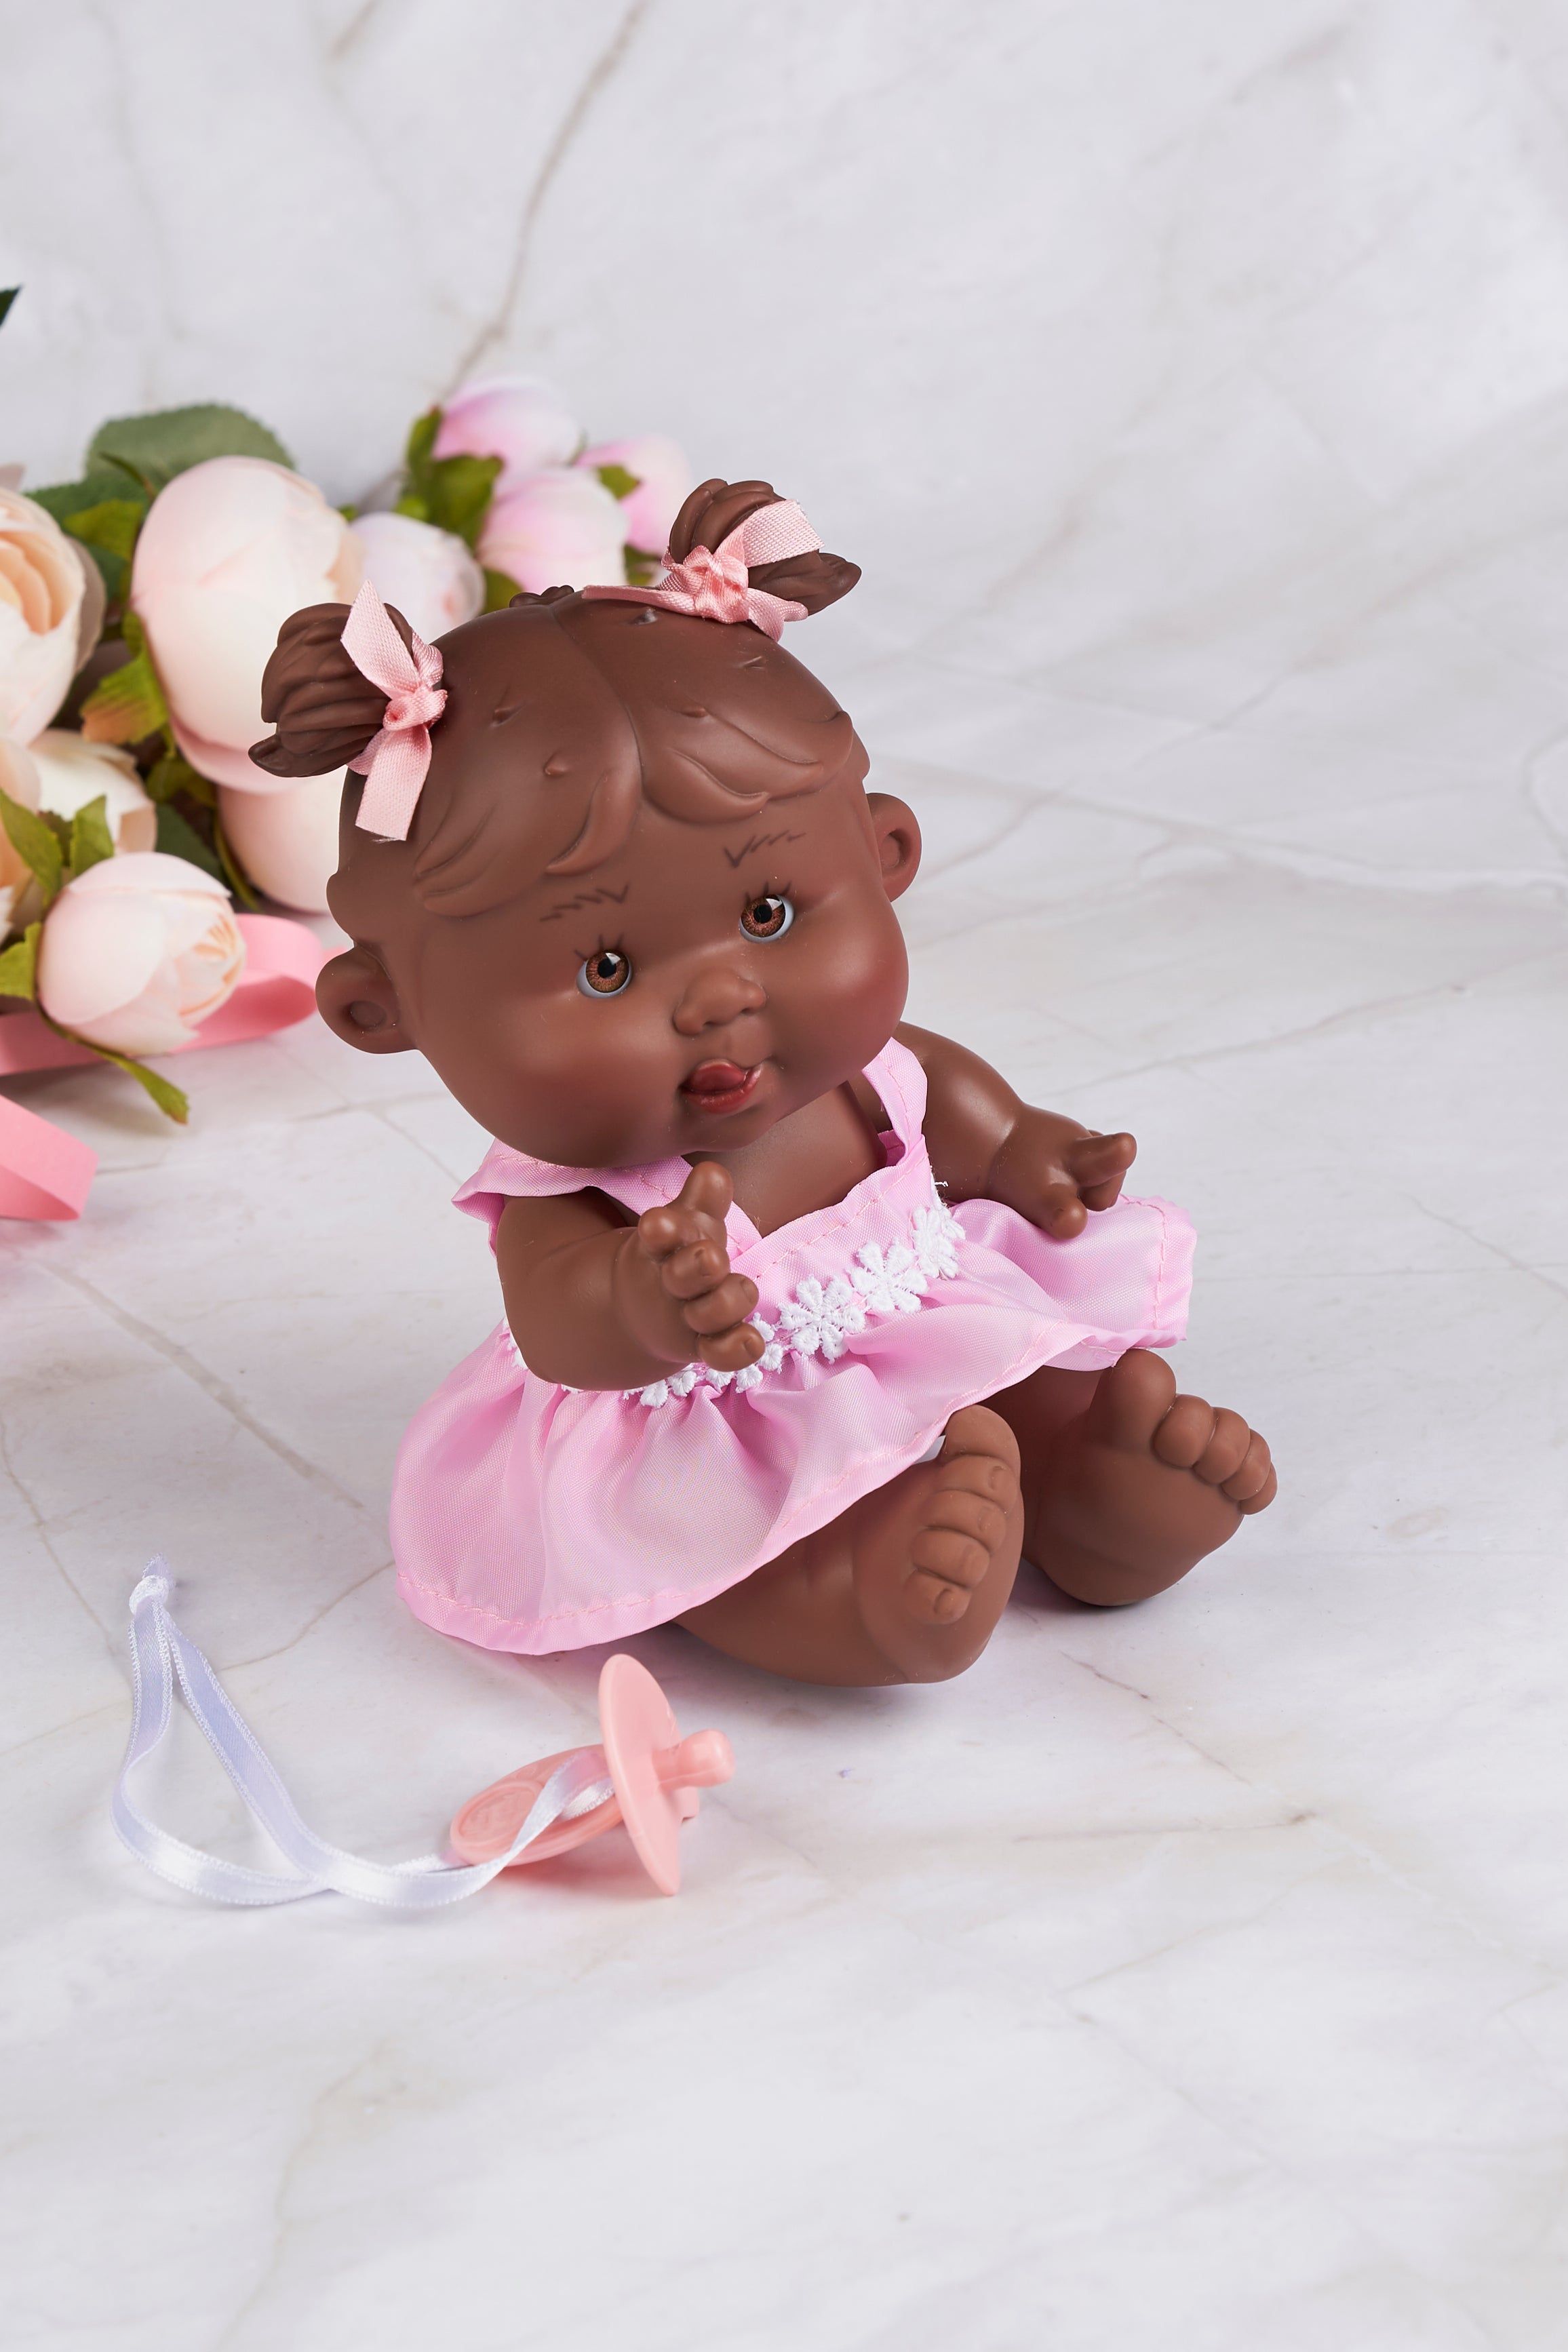 AnneBebe - Papusa Parfumata Pepotines Afro, cu Rochie Bretele roz Model Strengar, 21 cm 0494 Nines